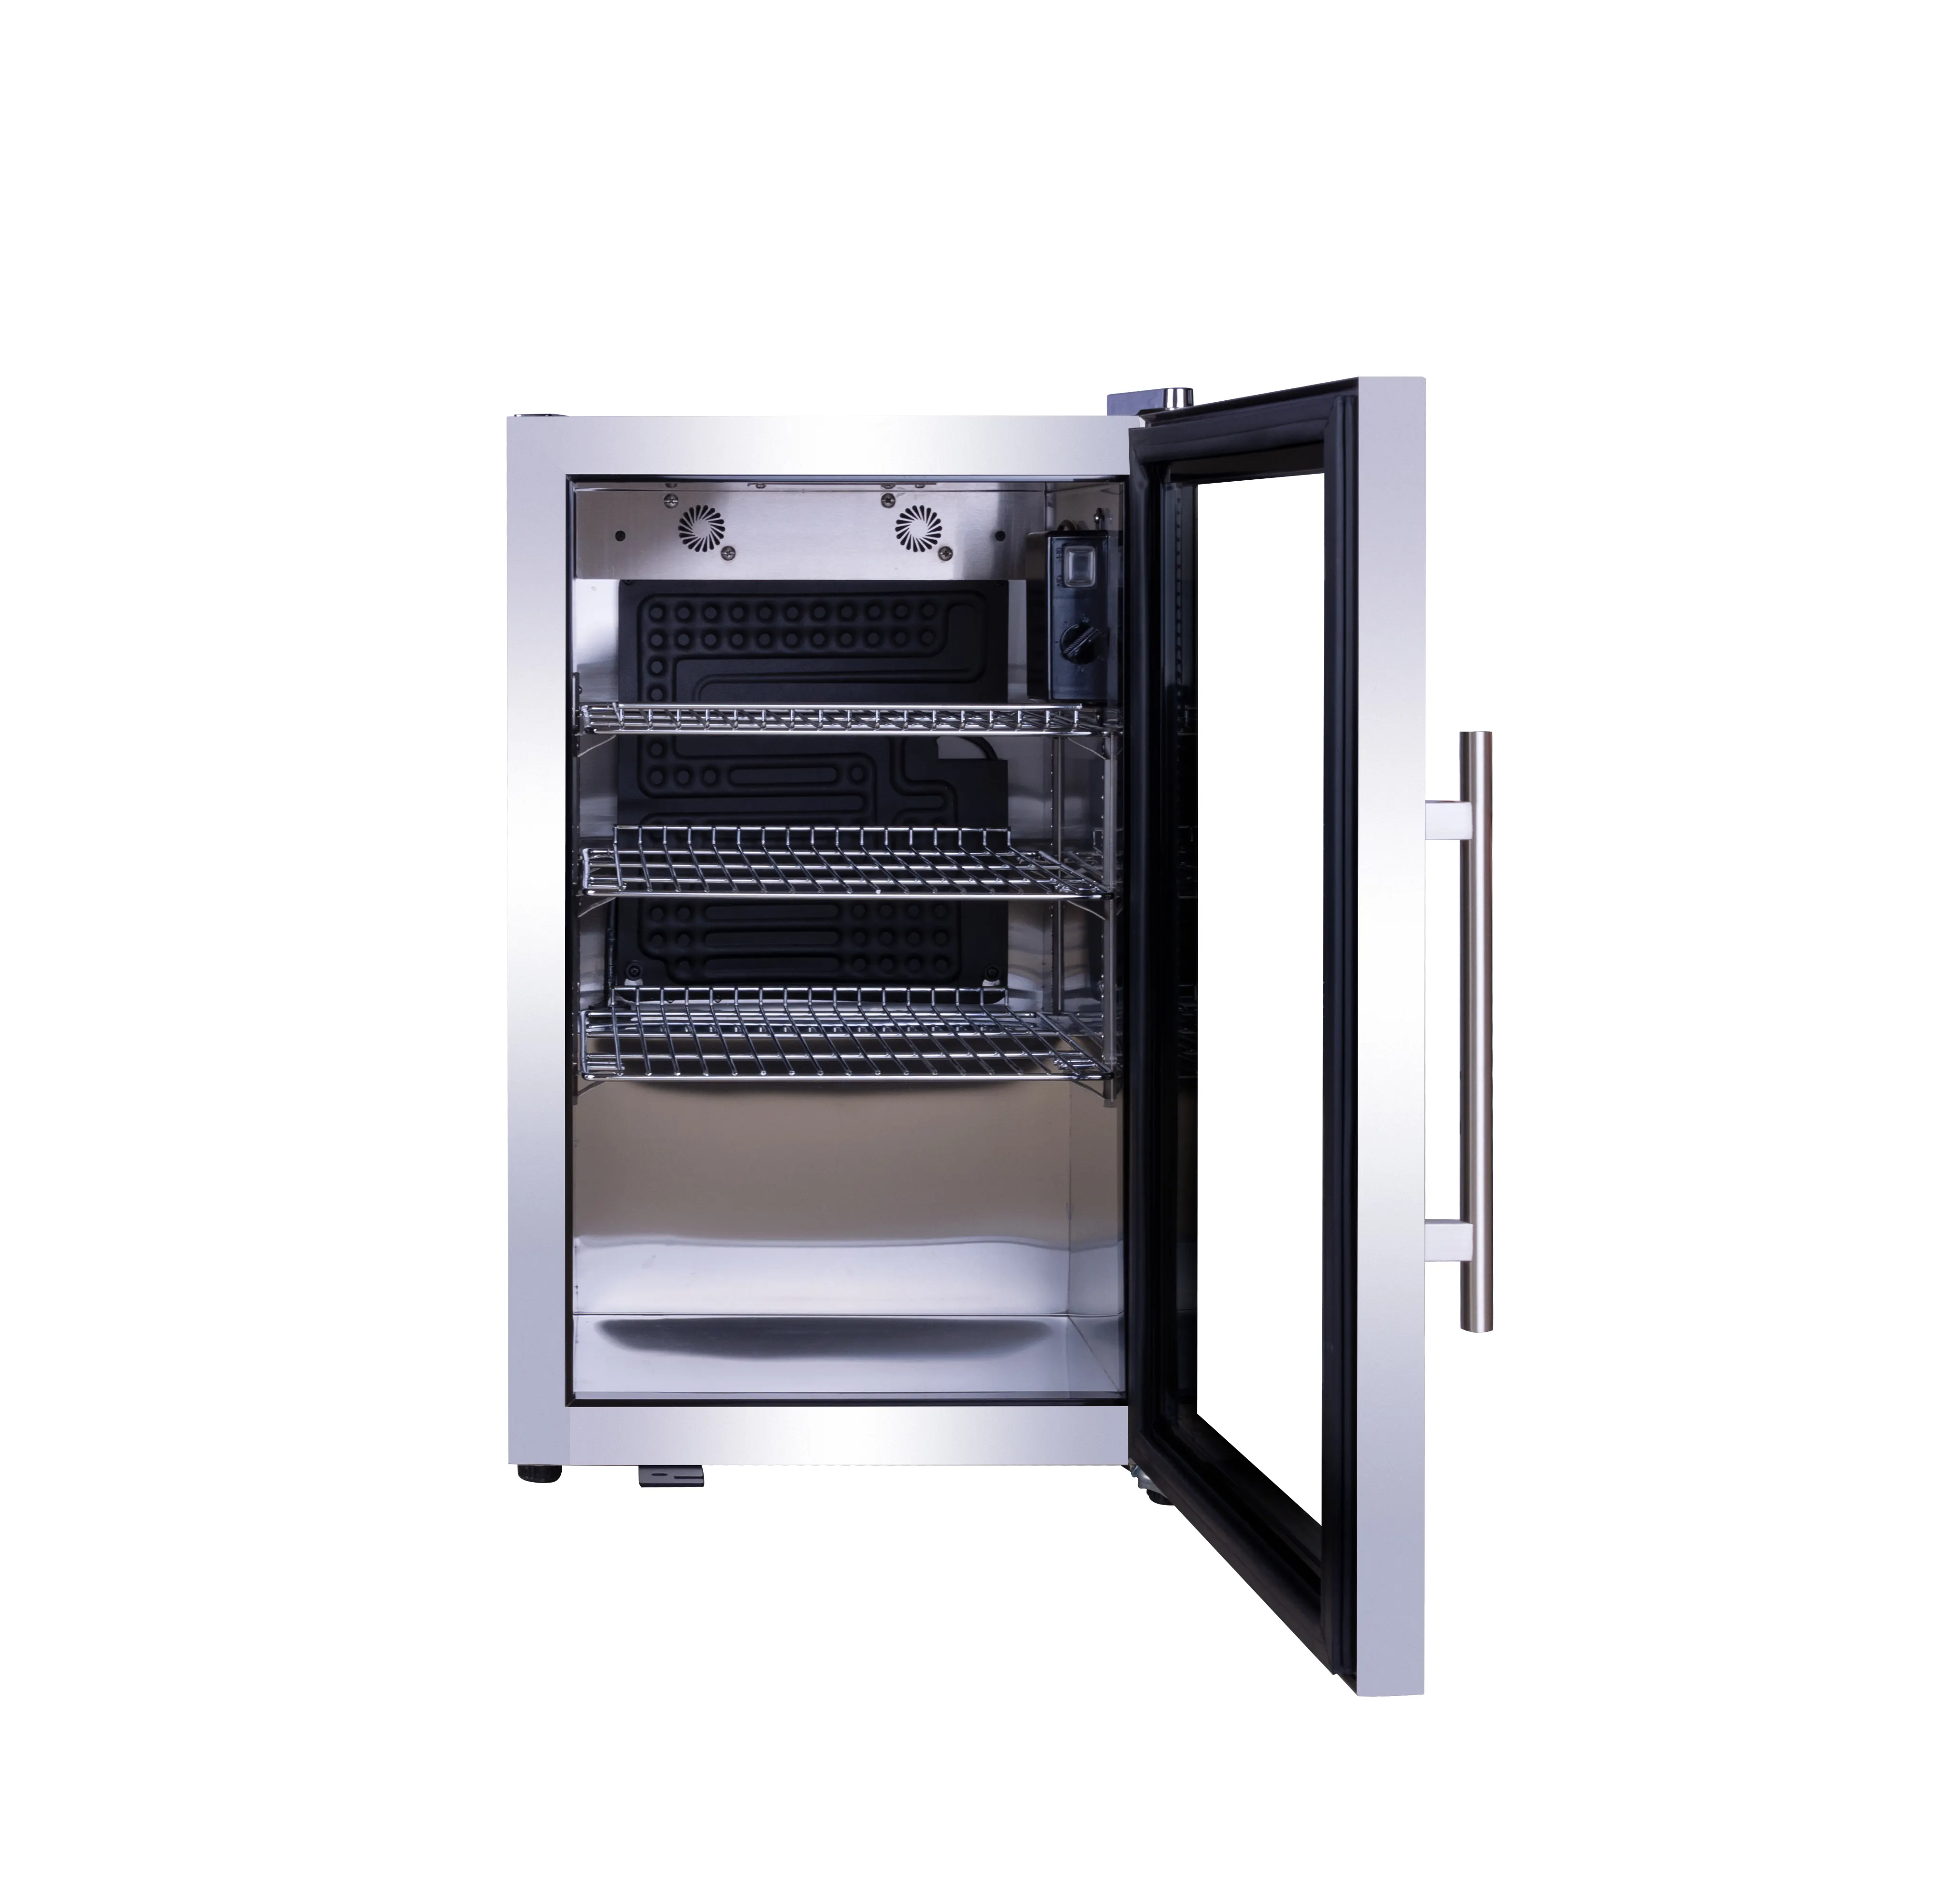 Bar Fridge Family Intelligent Refrigerator Stainless Steel 304 Outdoor Beverage Cooler Outdoor Bar Fridge